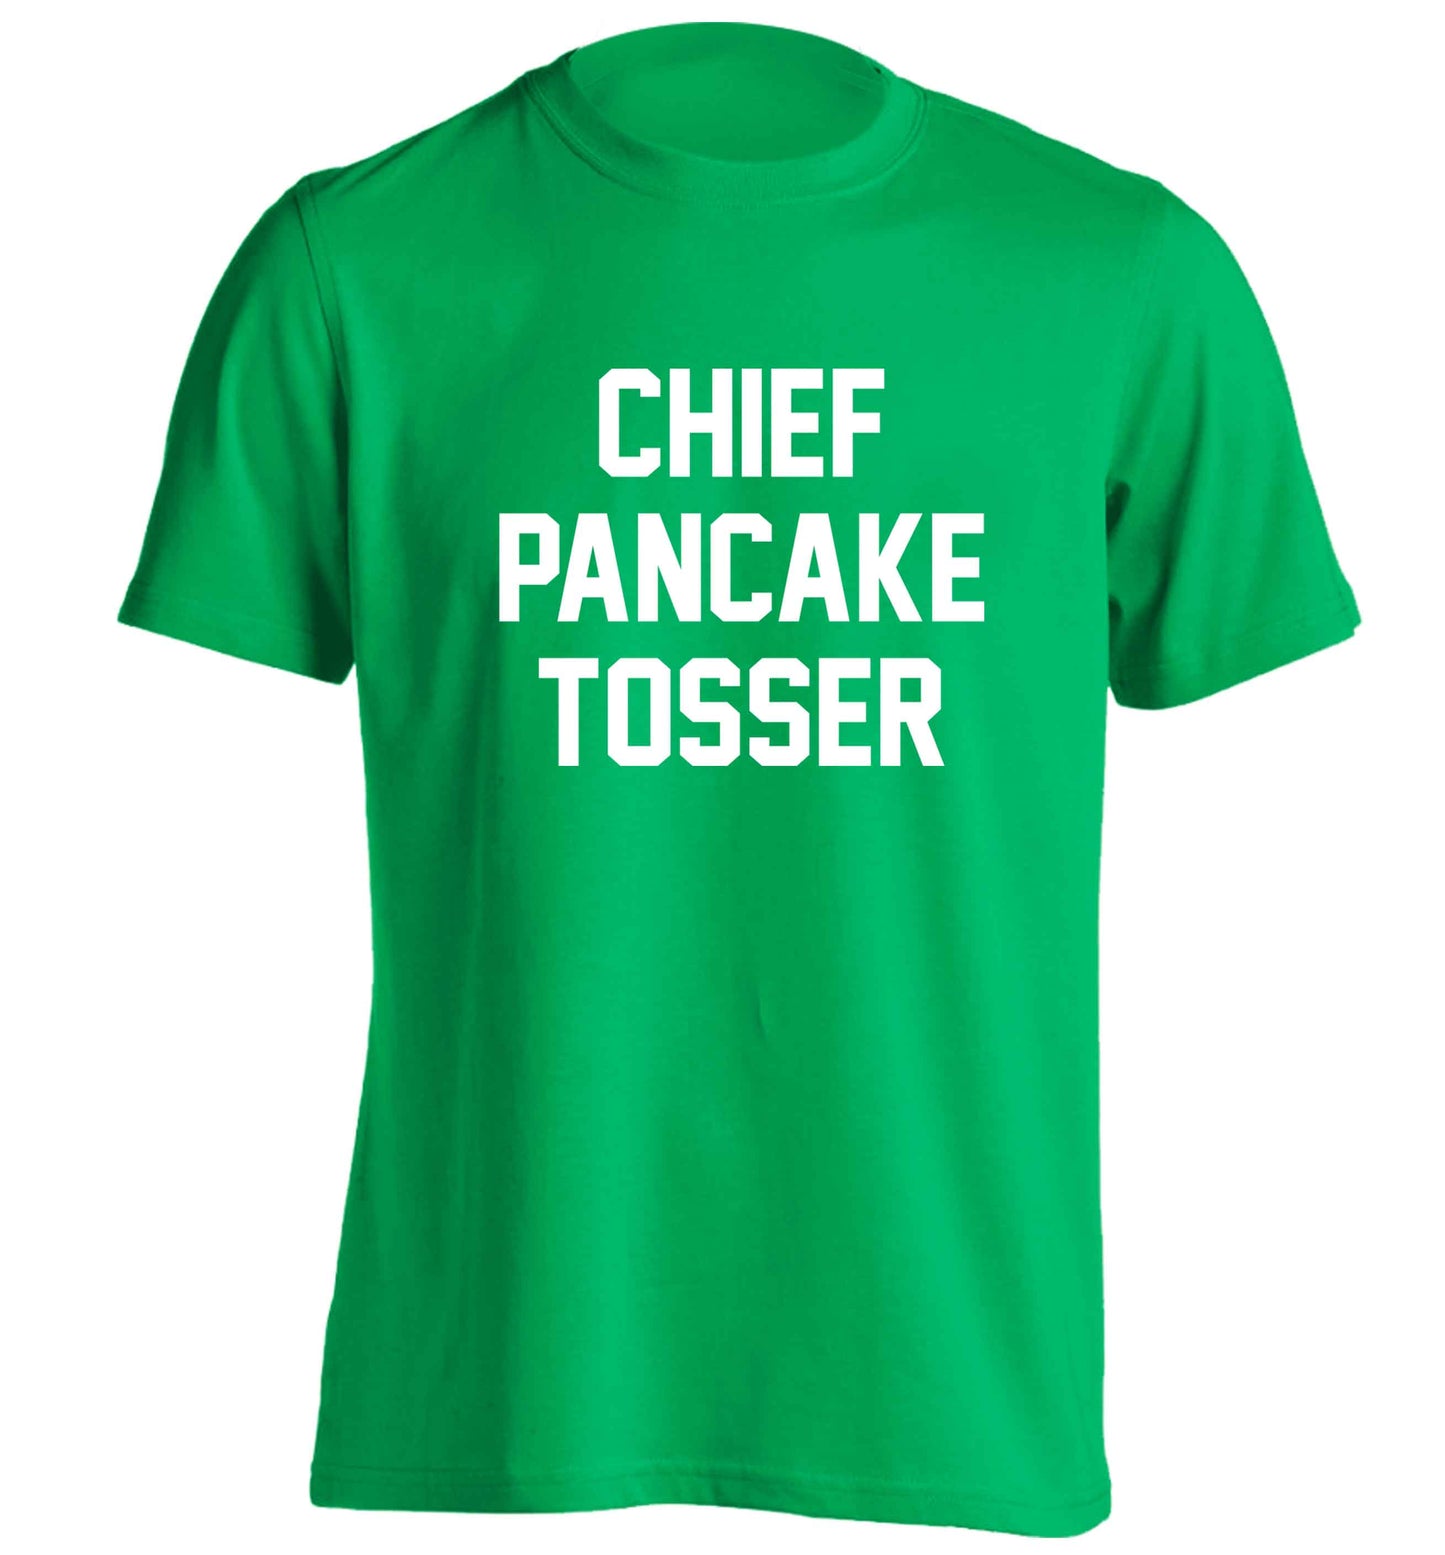 Chief pancake tosser adults unisex green Tshirt 2XL